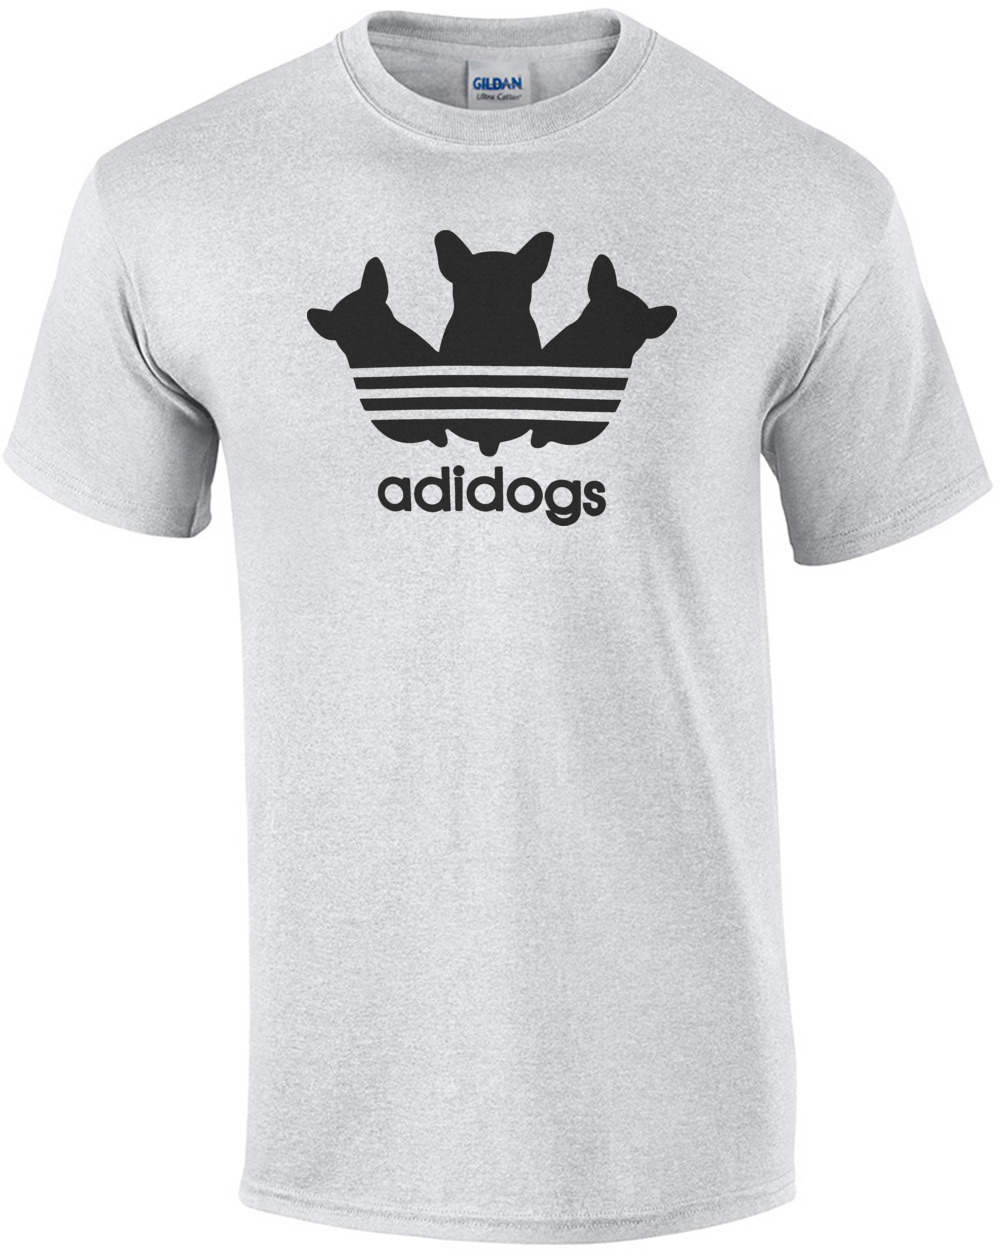 Adidogs - Funny Adidas Parody T-Shirt shirt